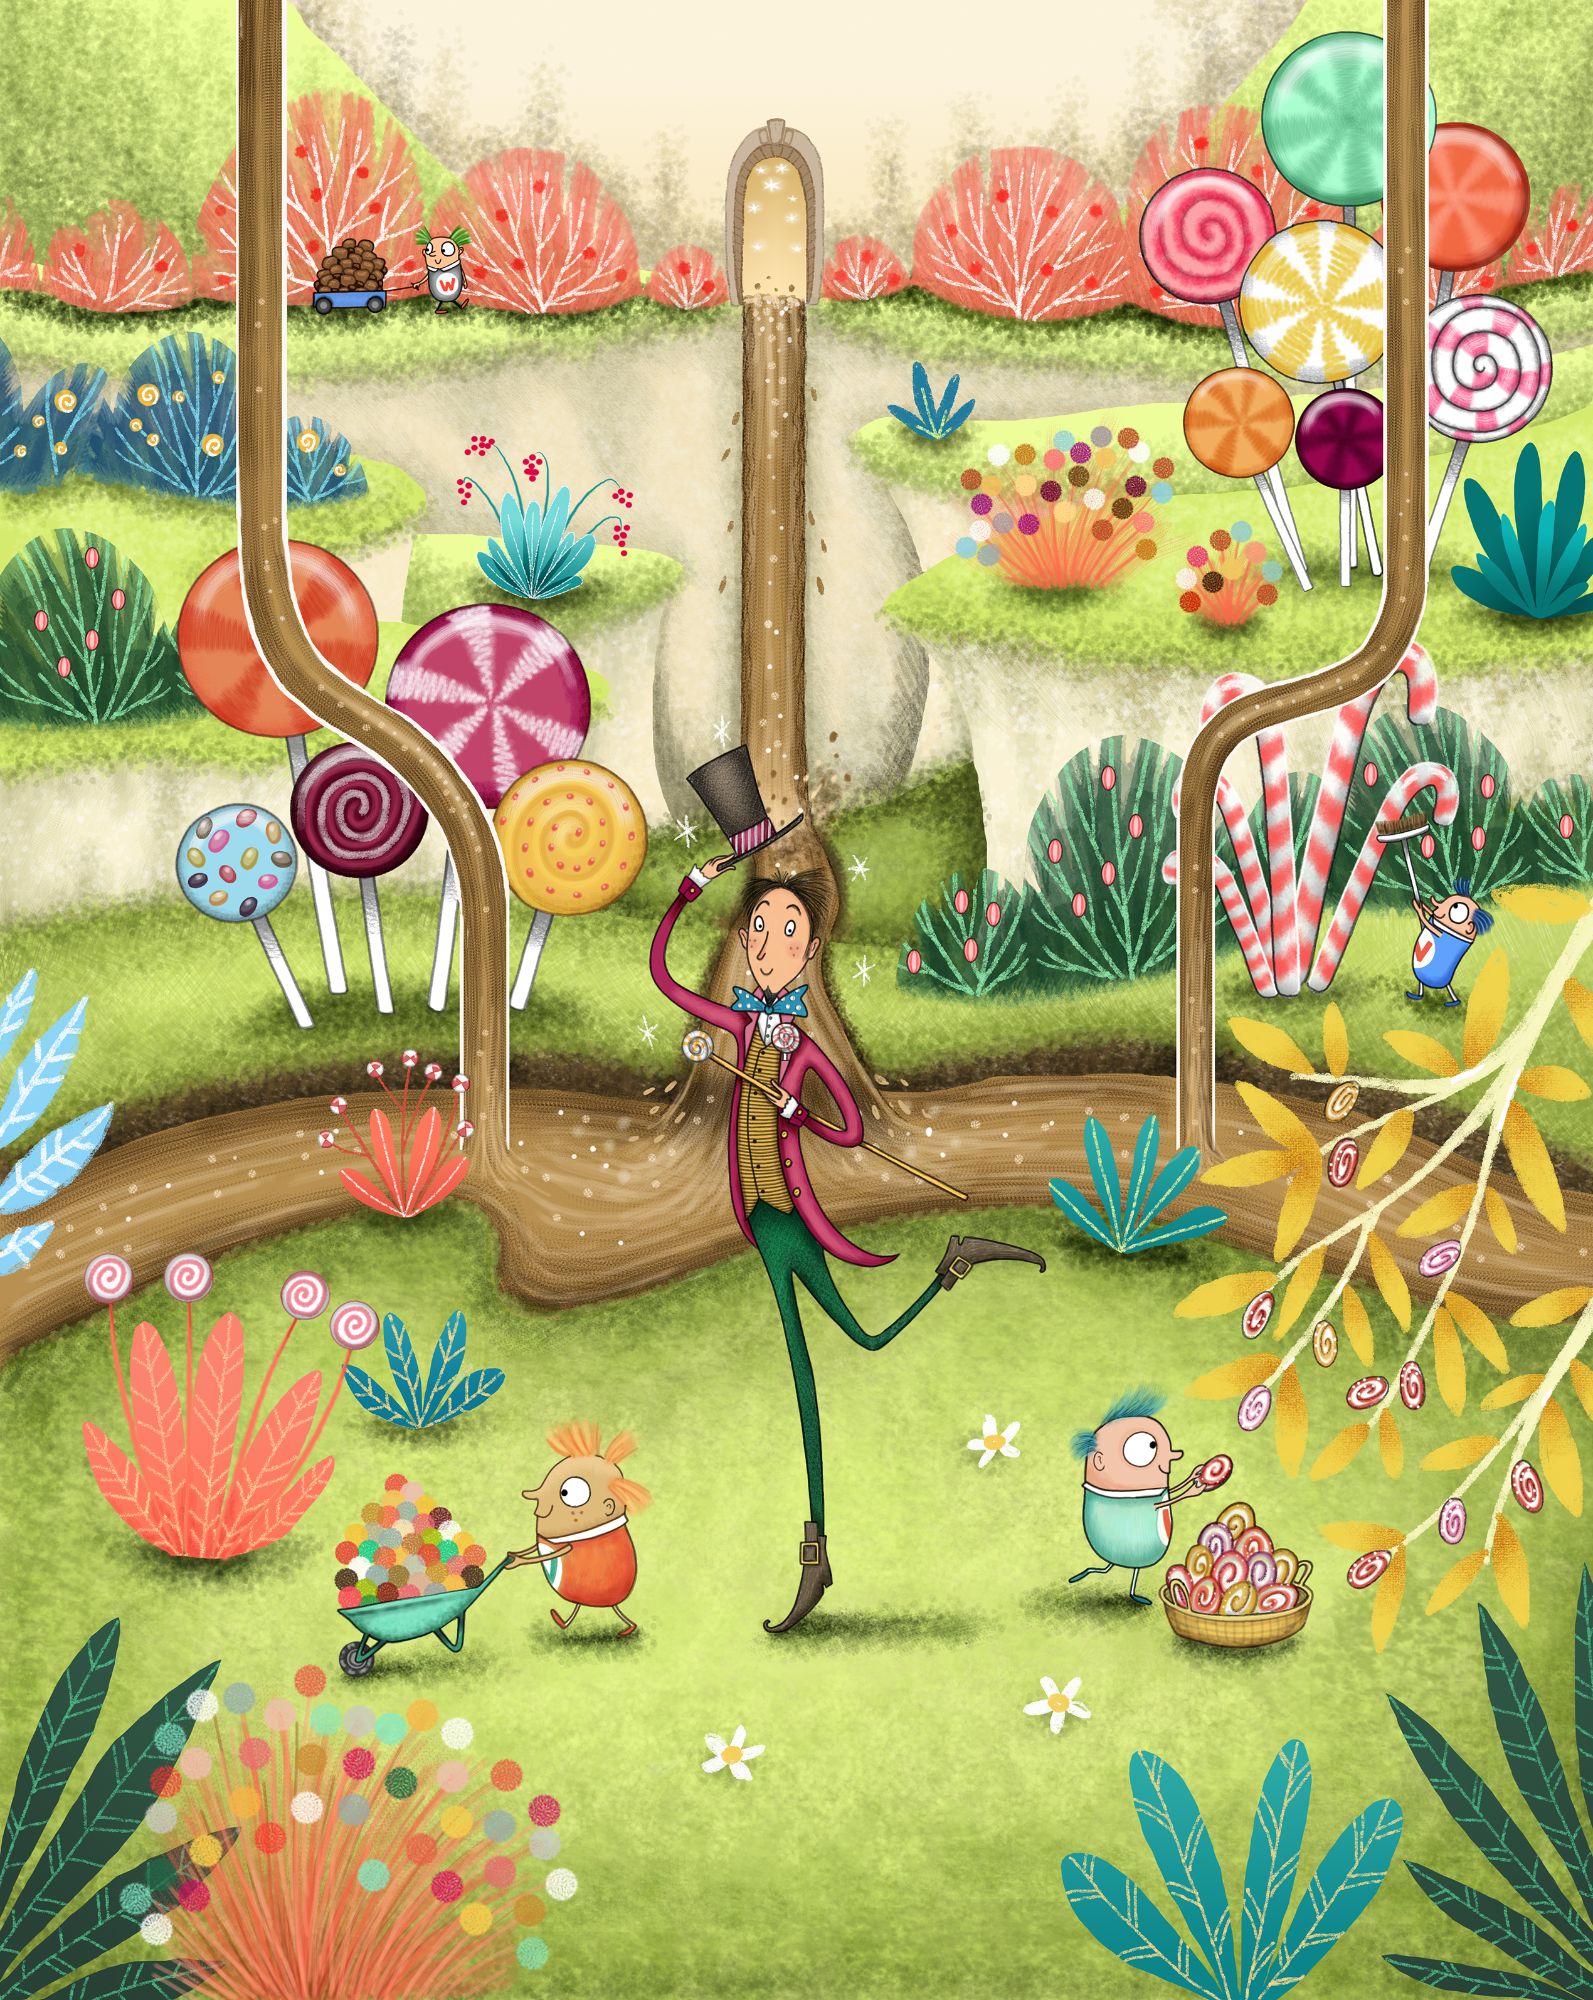 Mr Wonka Illustration by Emma Allen